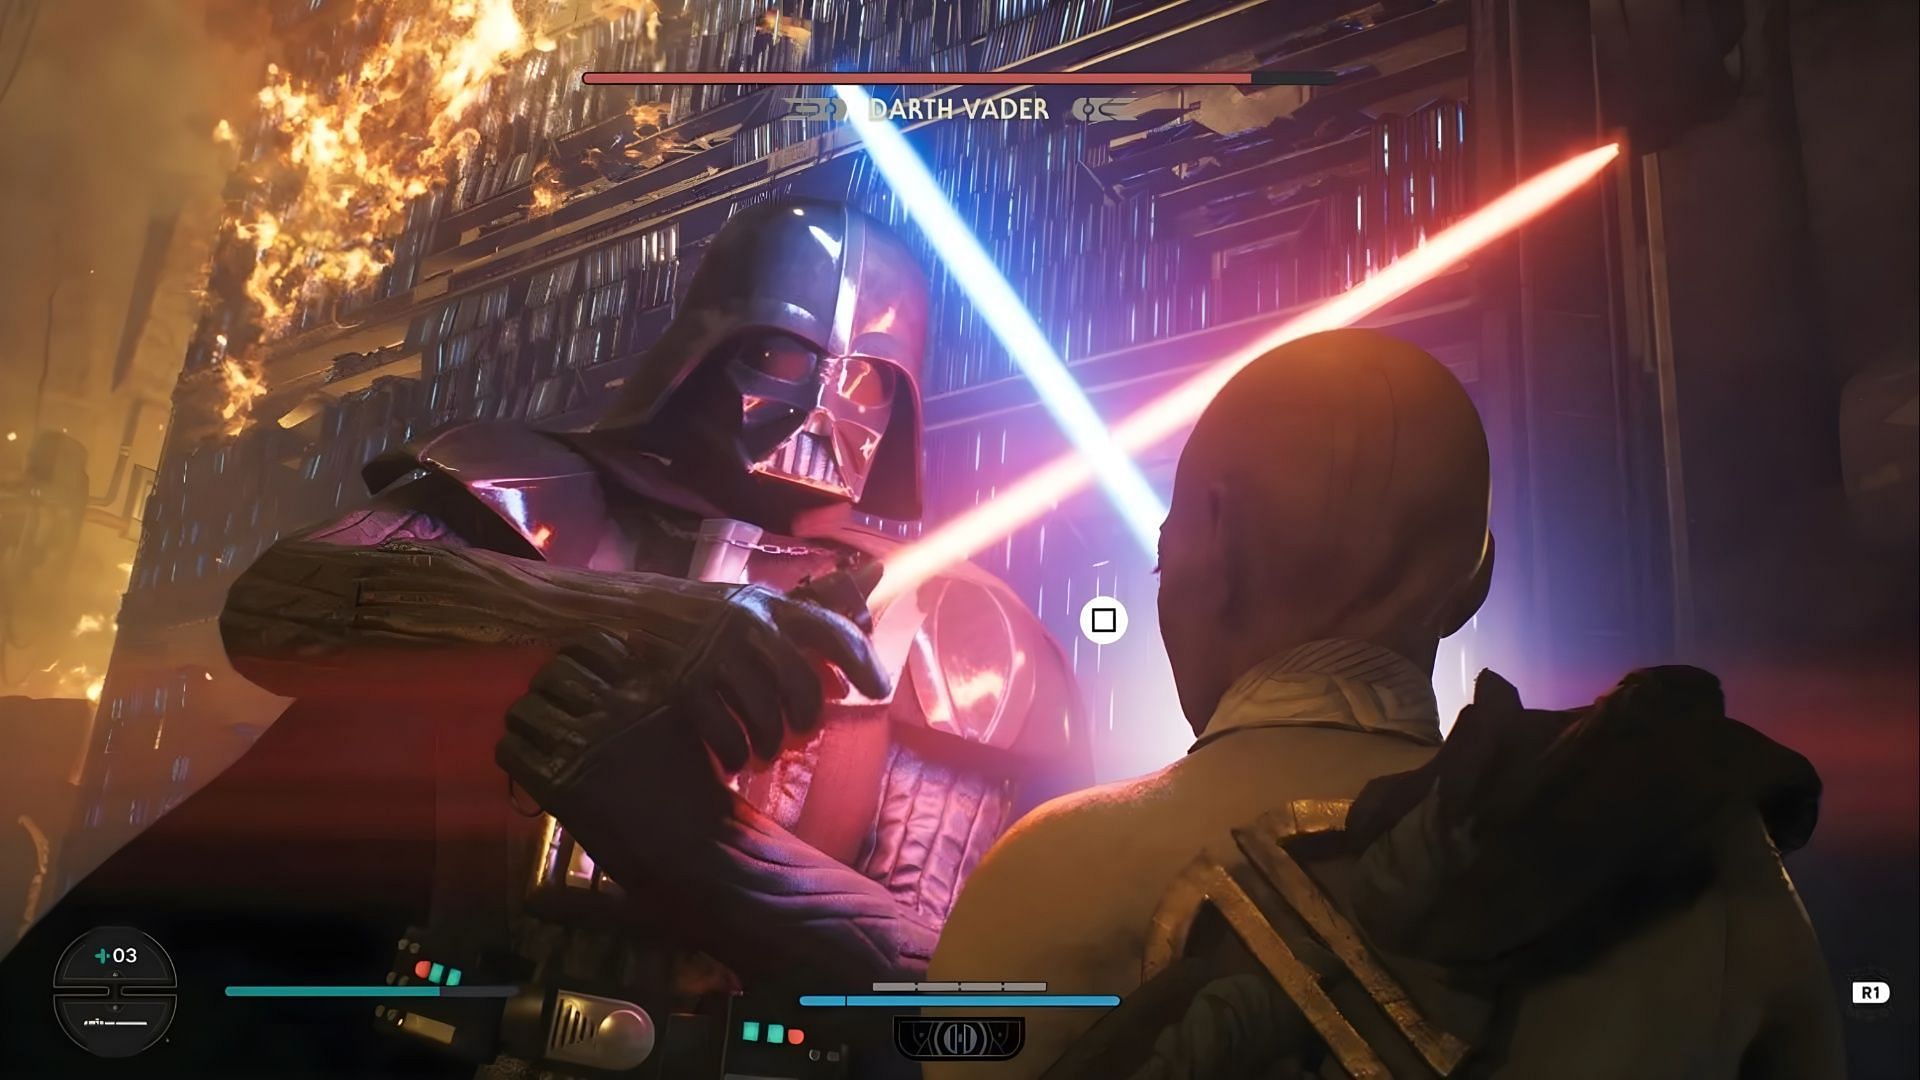 All Star Wars Jedi Survivor boss fights